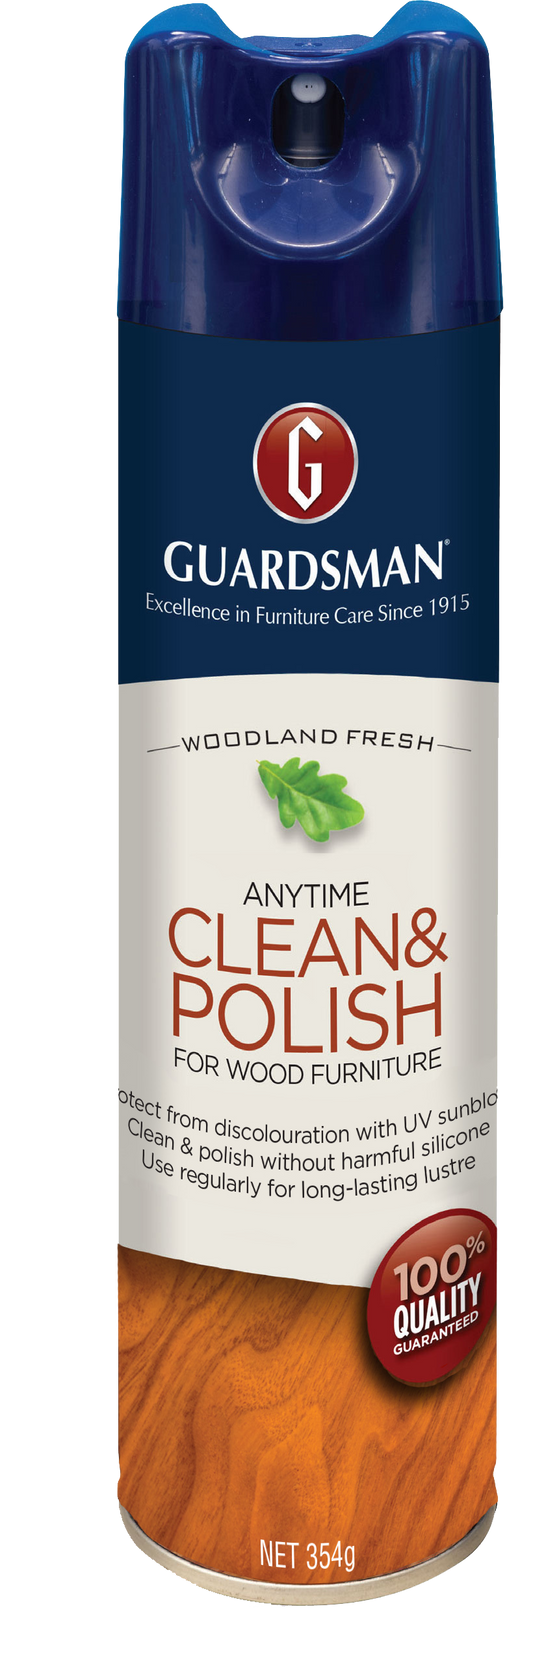 Guardsman Wood Clean & Polish